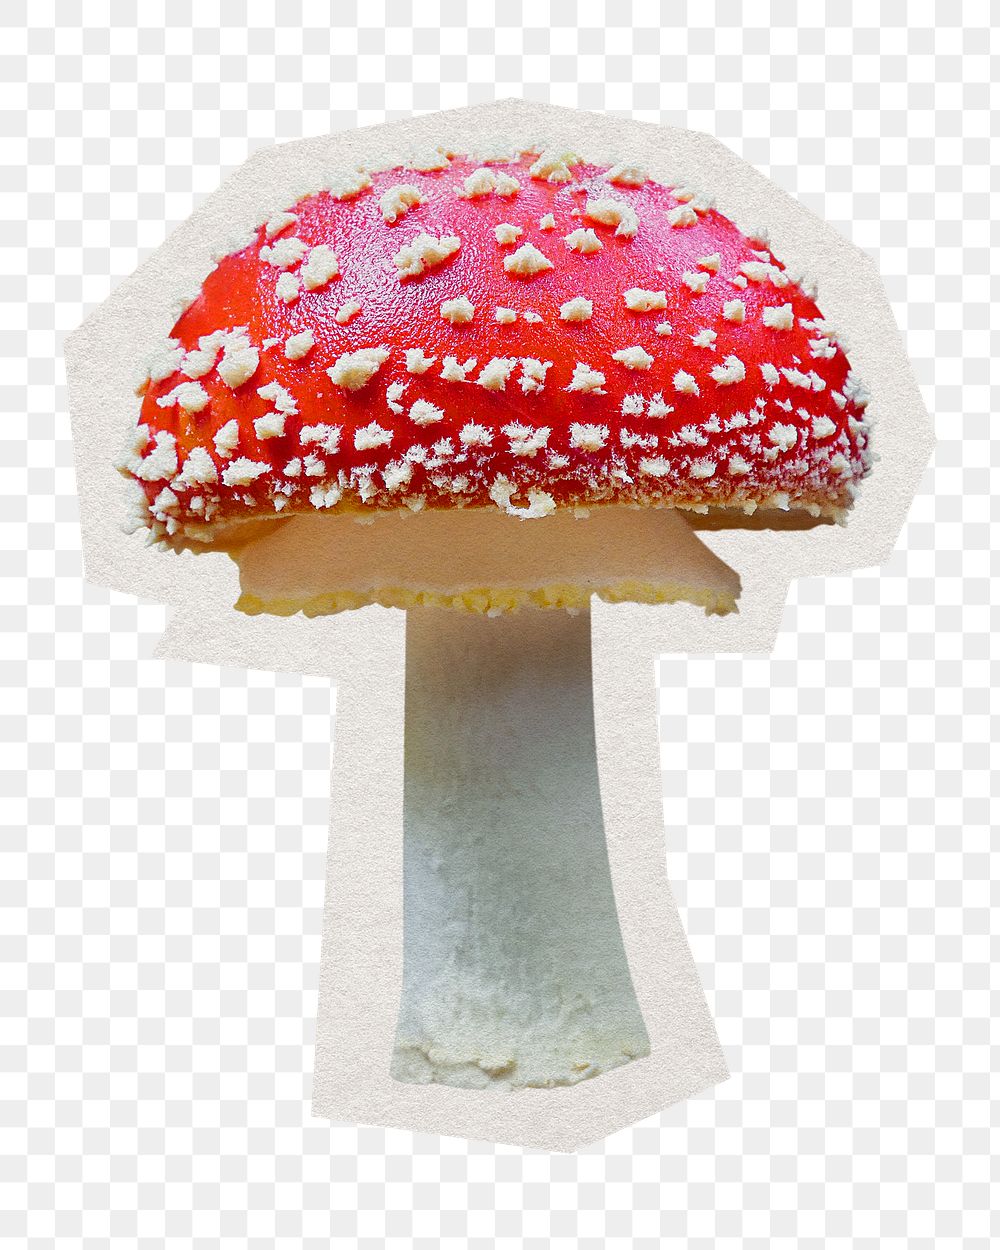 Poison mushroom png sticker, paper cut on transparent background